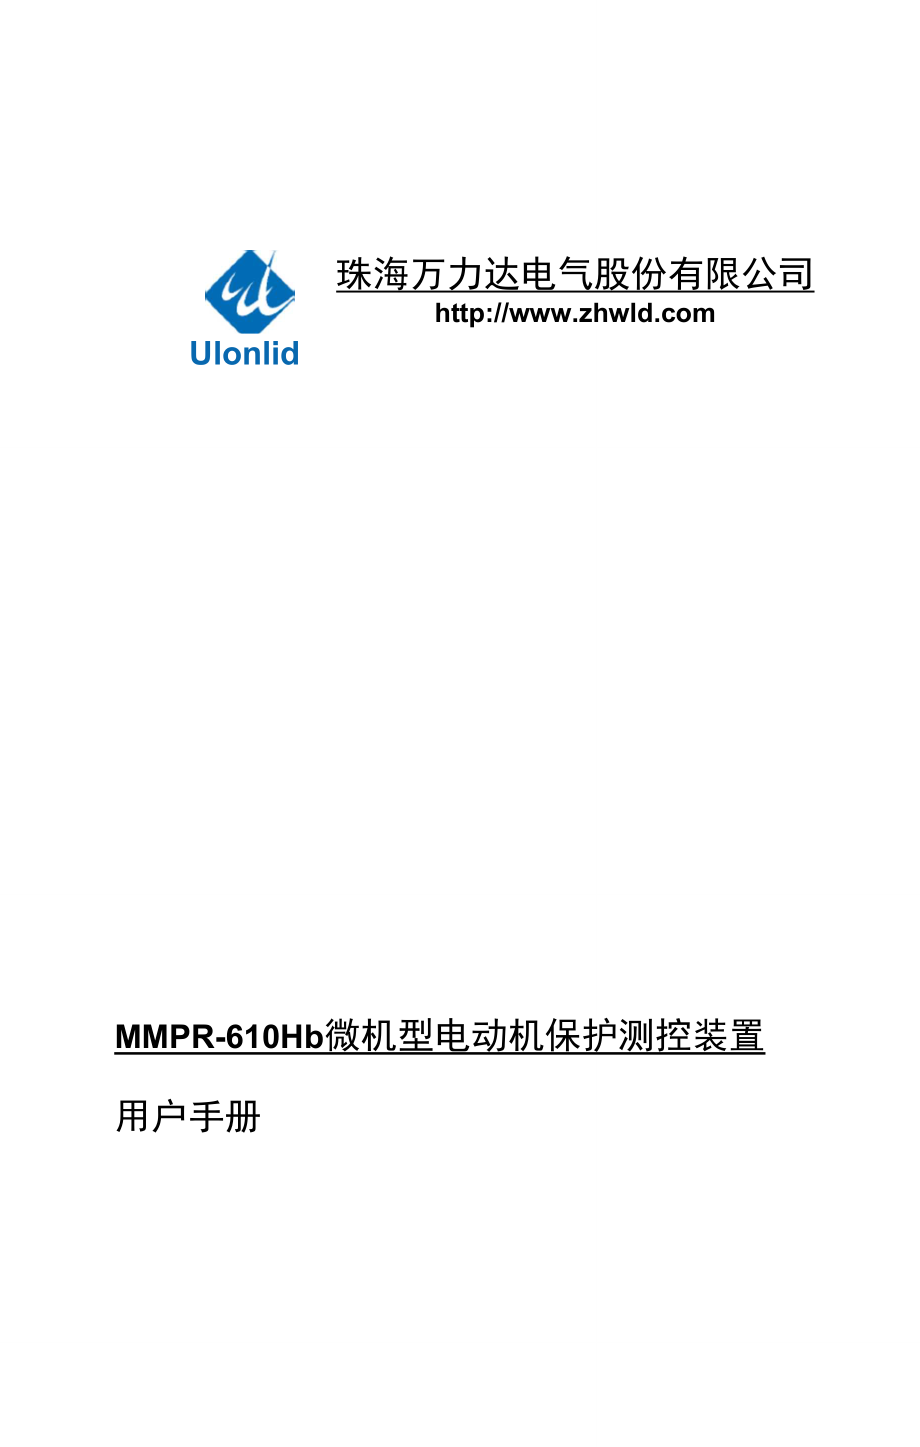 MMPR-610Hb微机型电动机保护测控装置用户手册V2.03.01_第1页